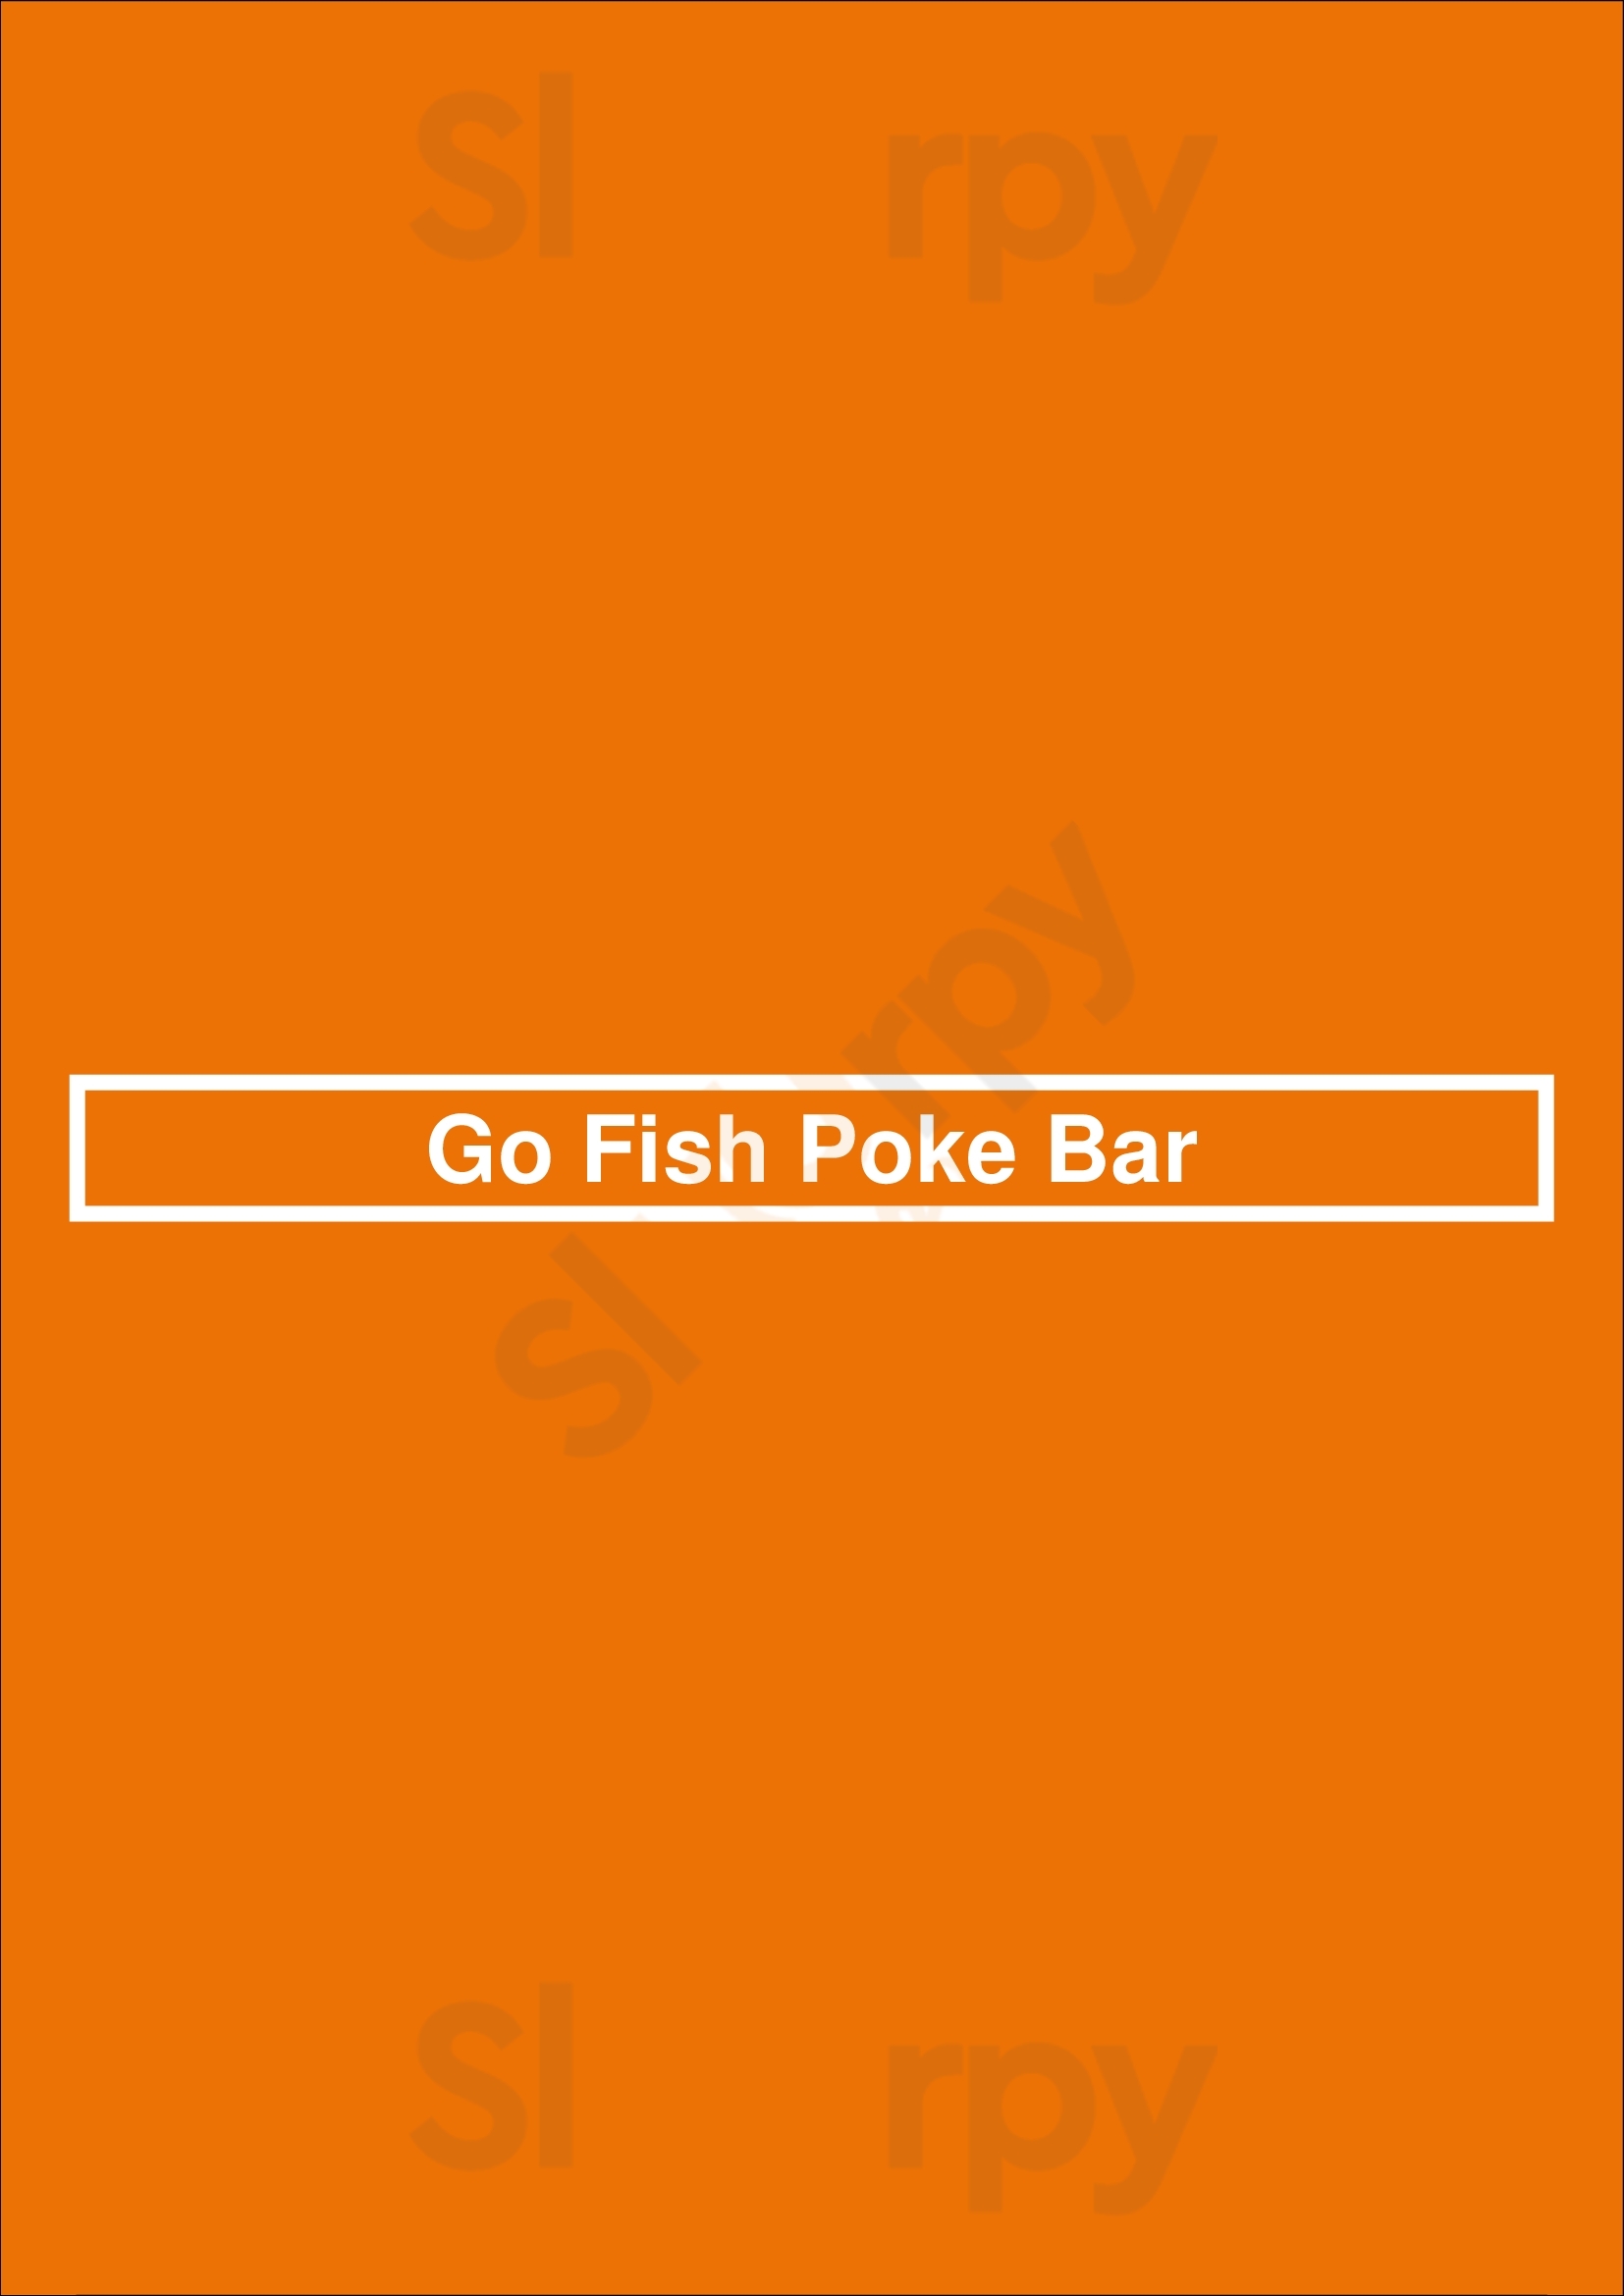 Go Fish Poke Bar San Jose Menu - 1